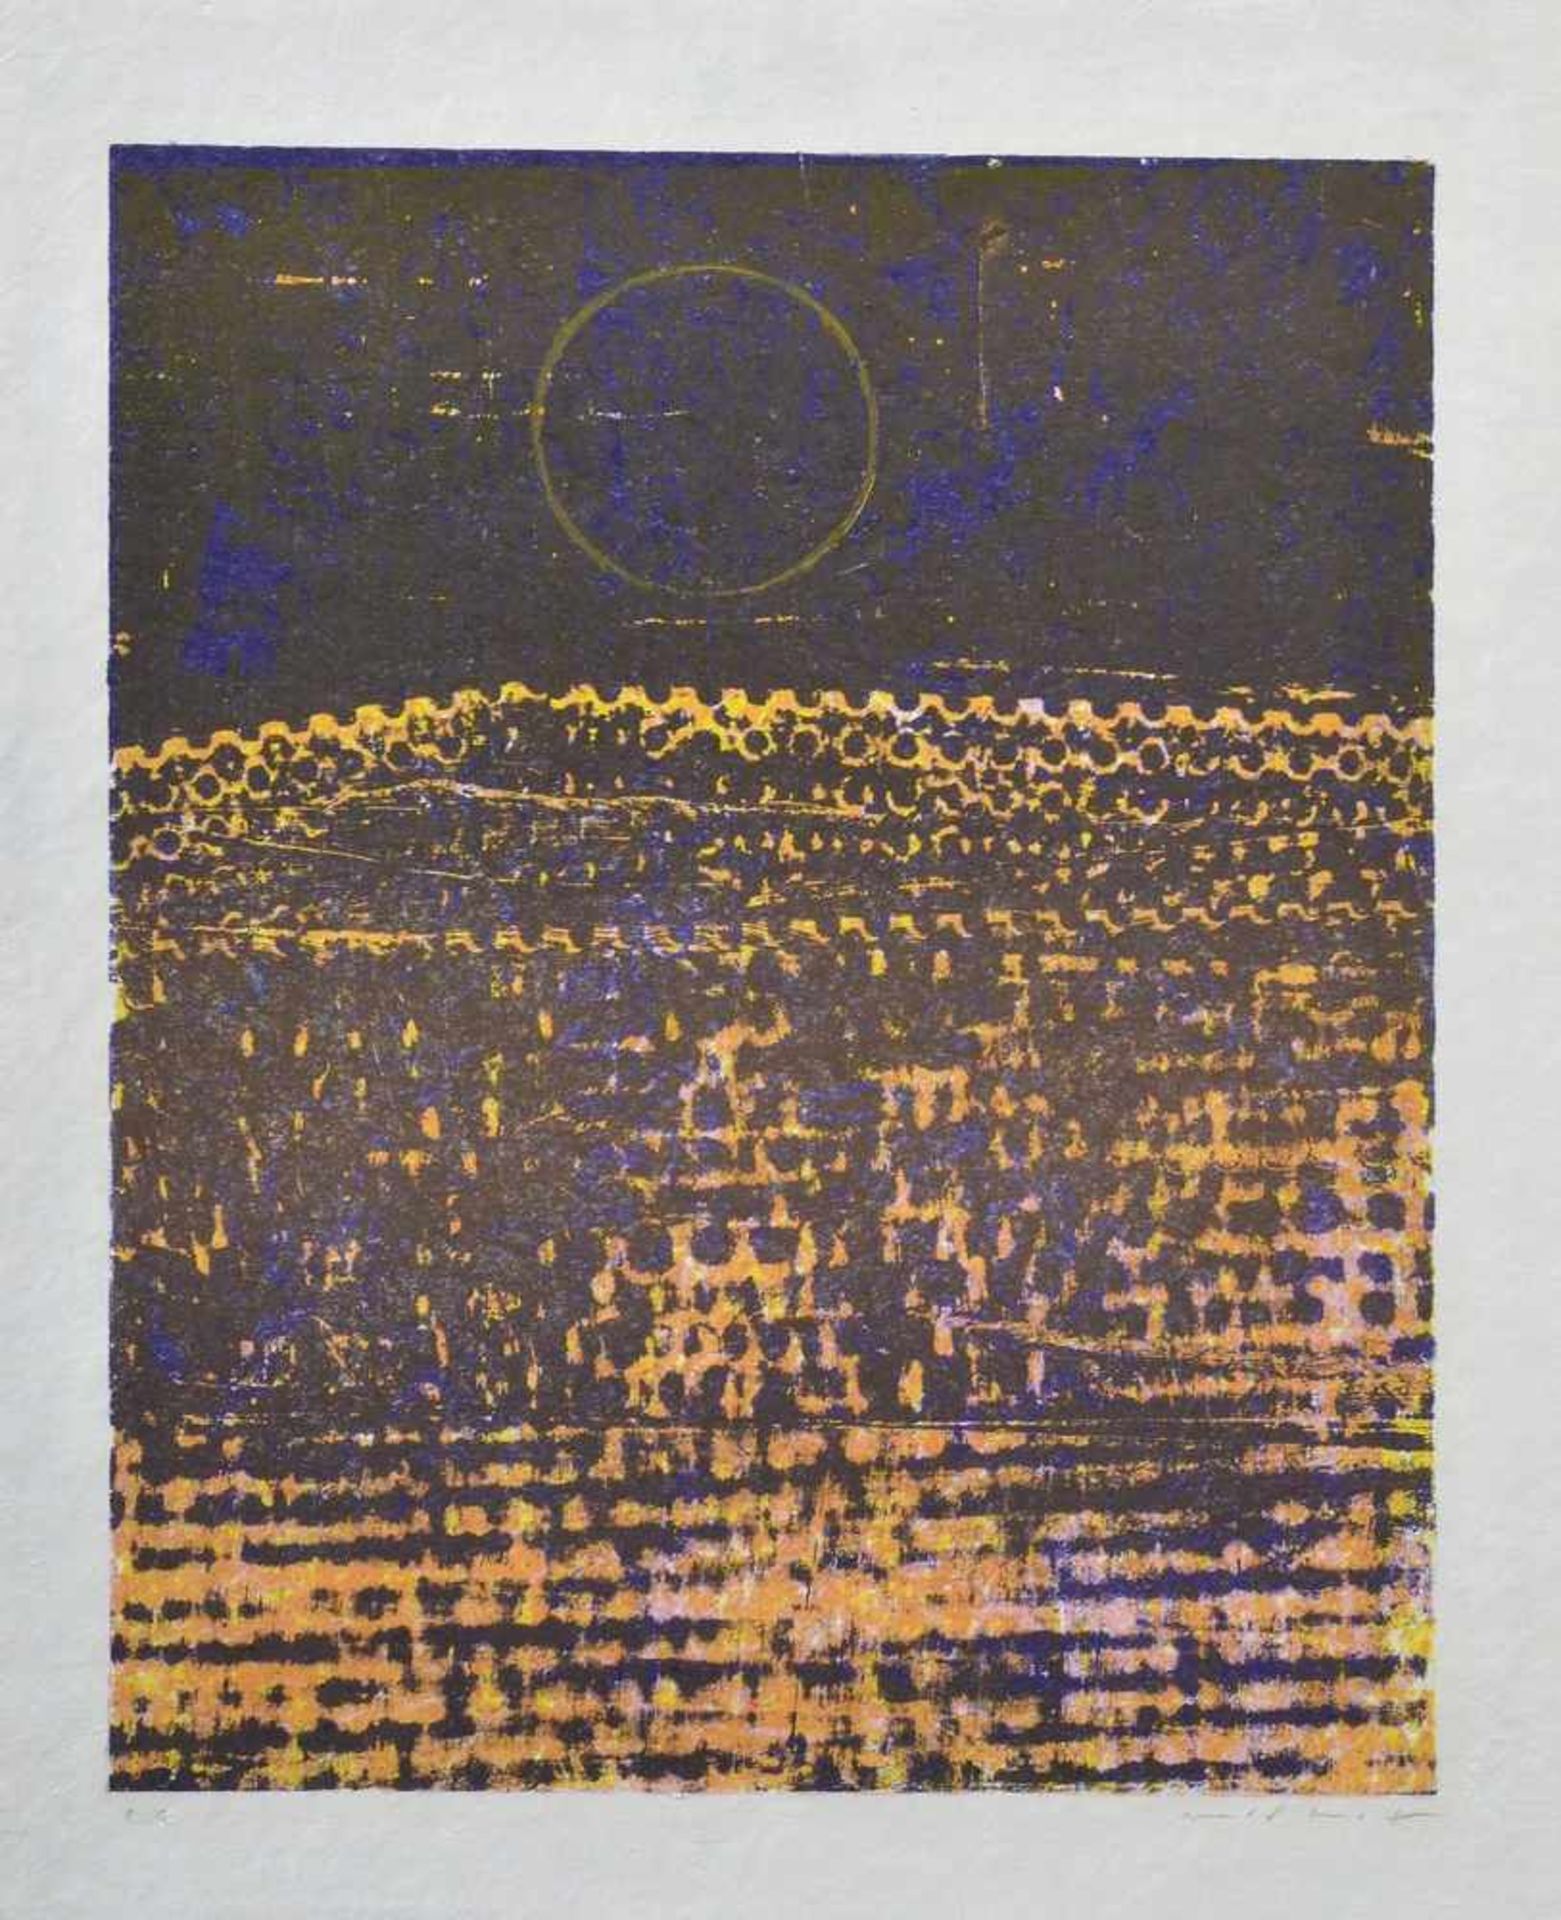 Ernst, Max (1891-1976) "Sonne" um 1970, Farboffsetlitho auf Japanpapier, e.a./u.r.sign., 36,5x29,5cm